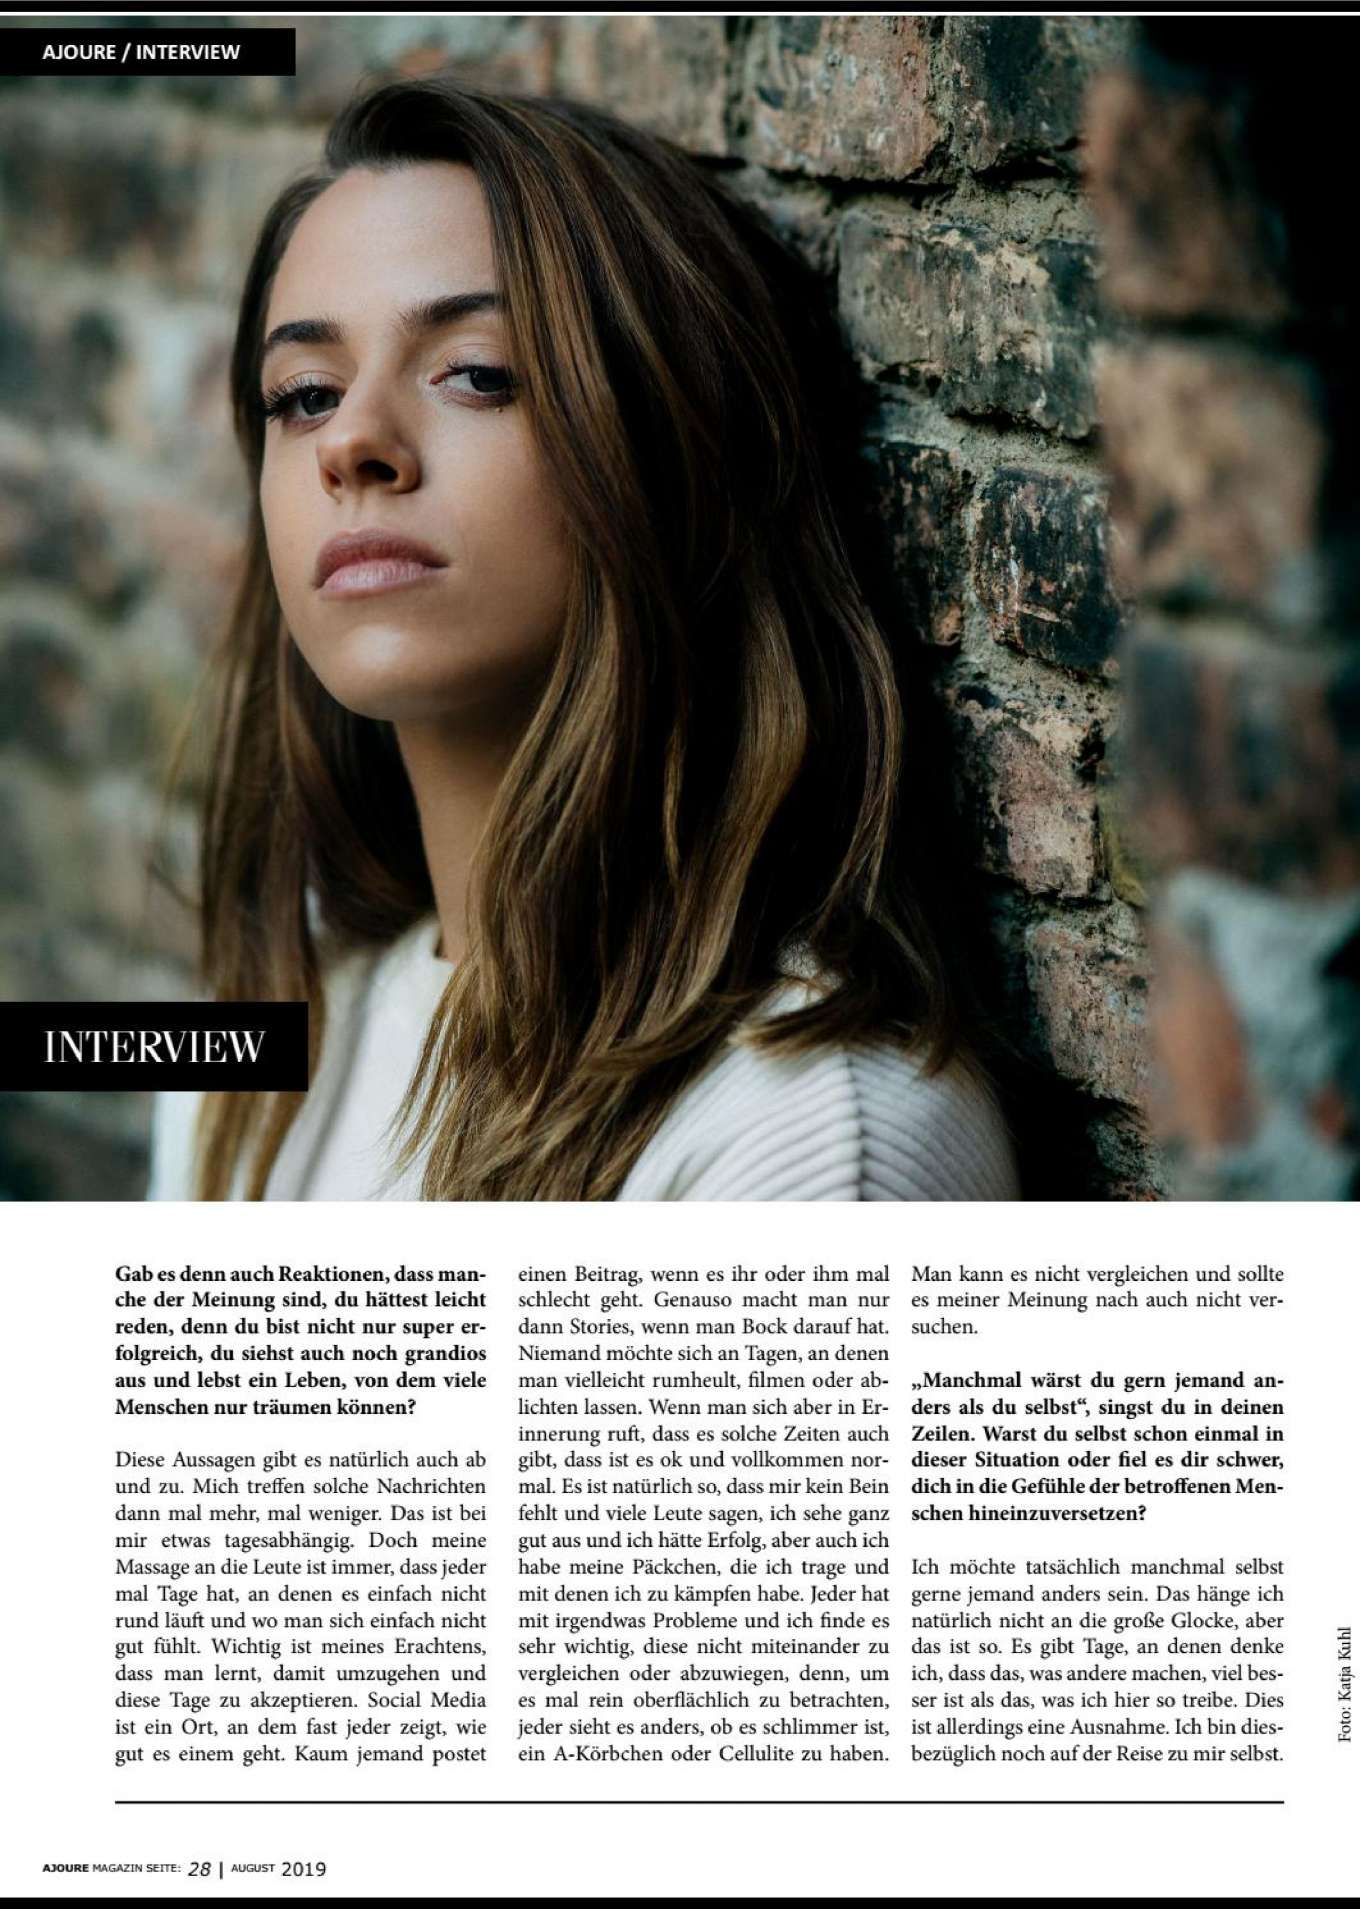 Vanessa Mai â€“ Ajoure Magazine (August 2019)